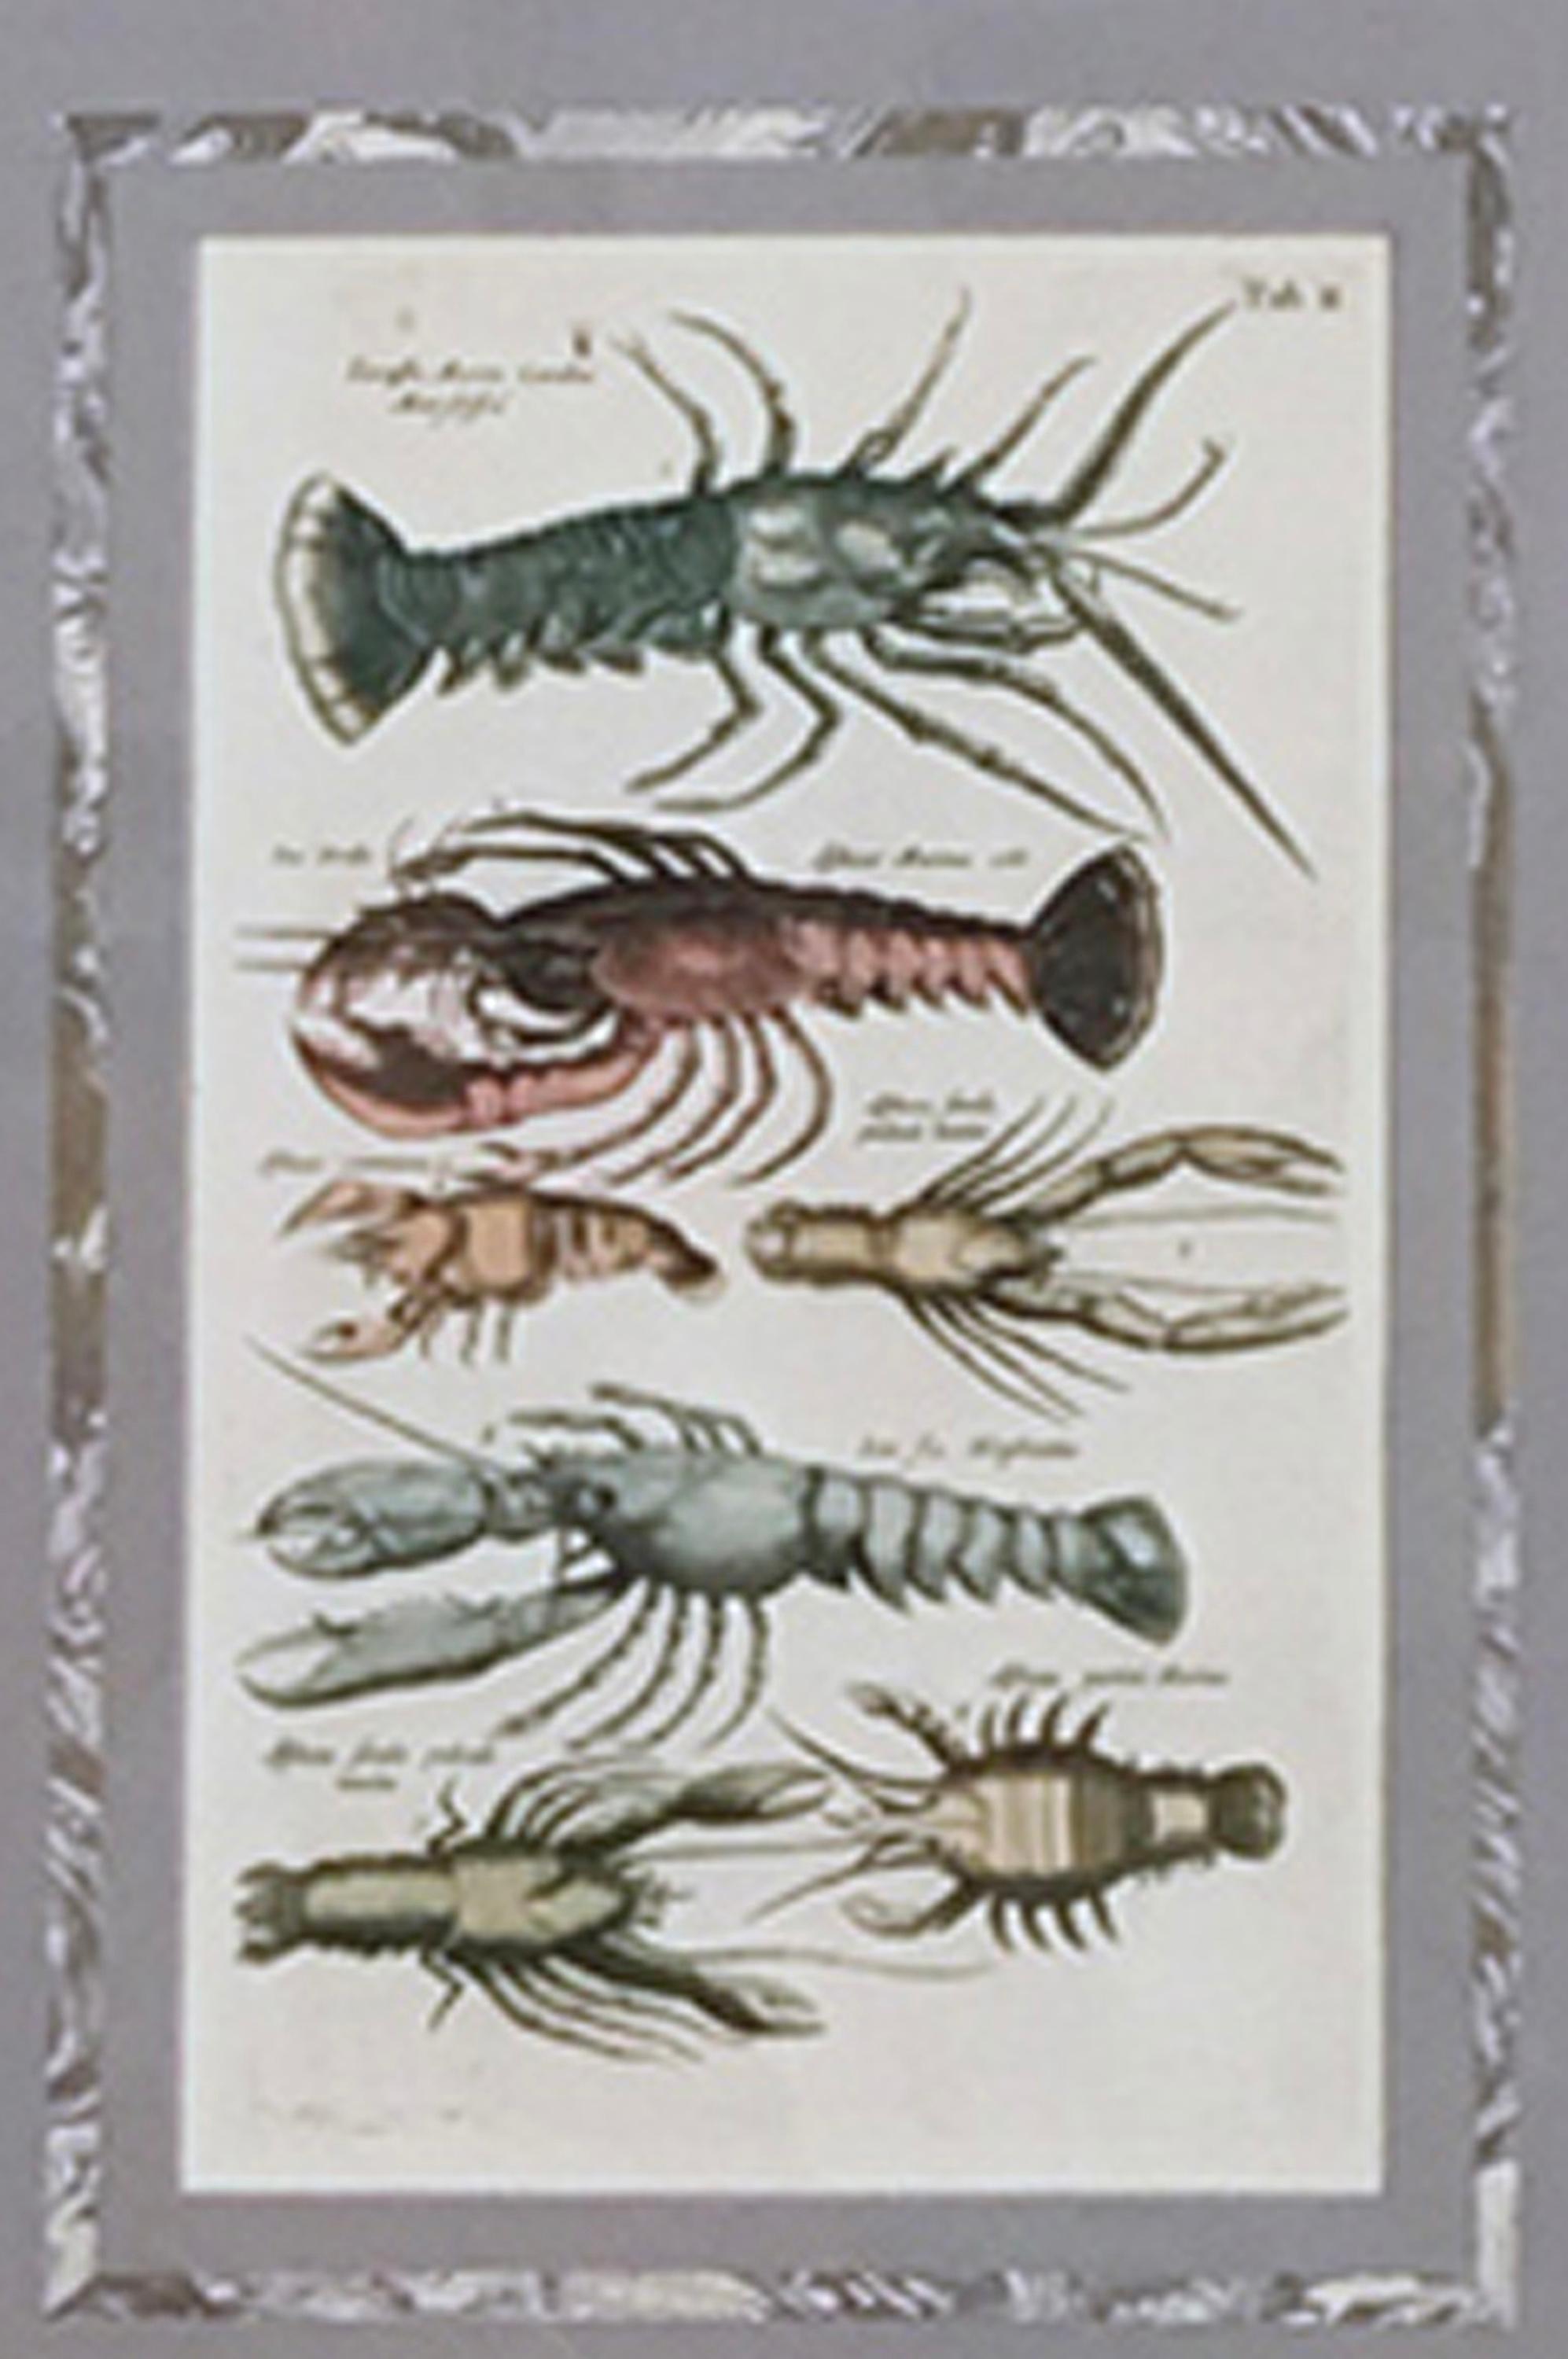 Lobster - Other Art Style Print by Matthäus Merian the Elder